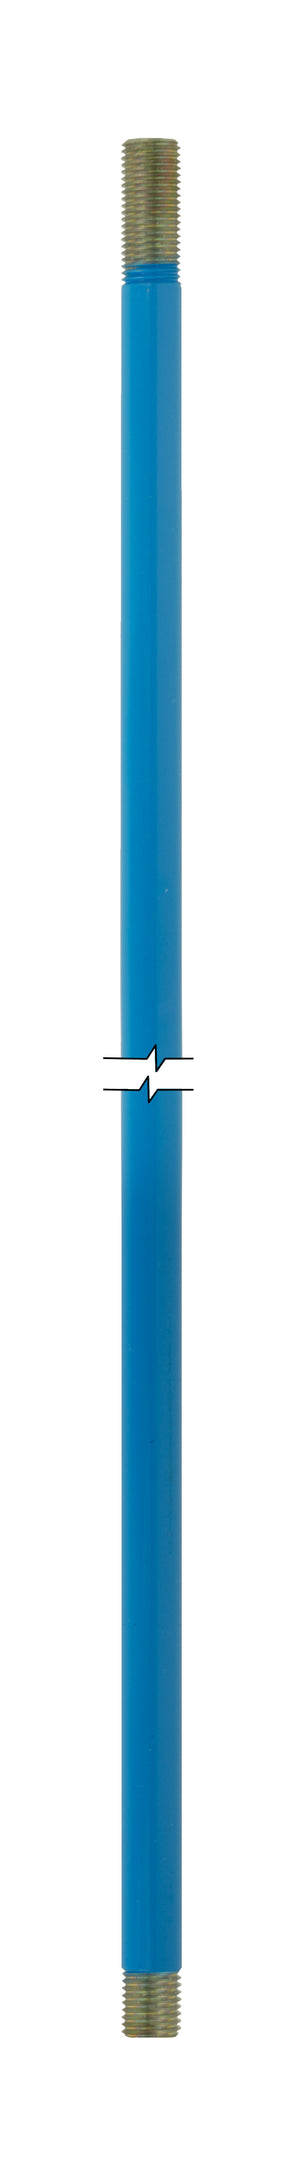 3/8 inch round rod, 66 inch length